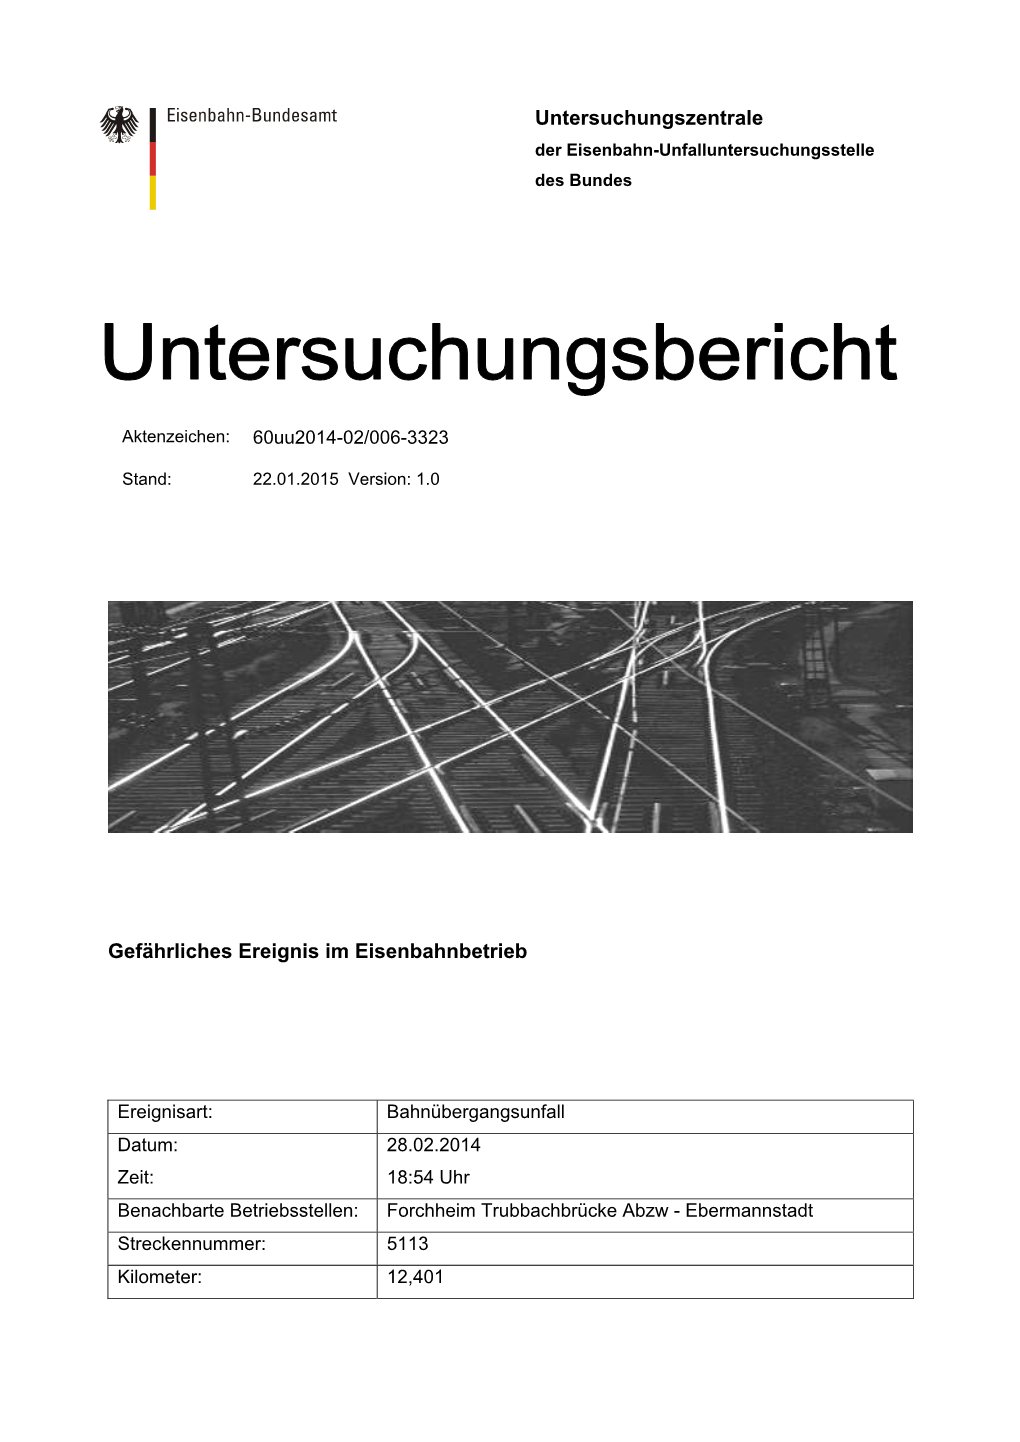 Untersuchungsbericht Forchheim Trubbachbrücke